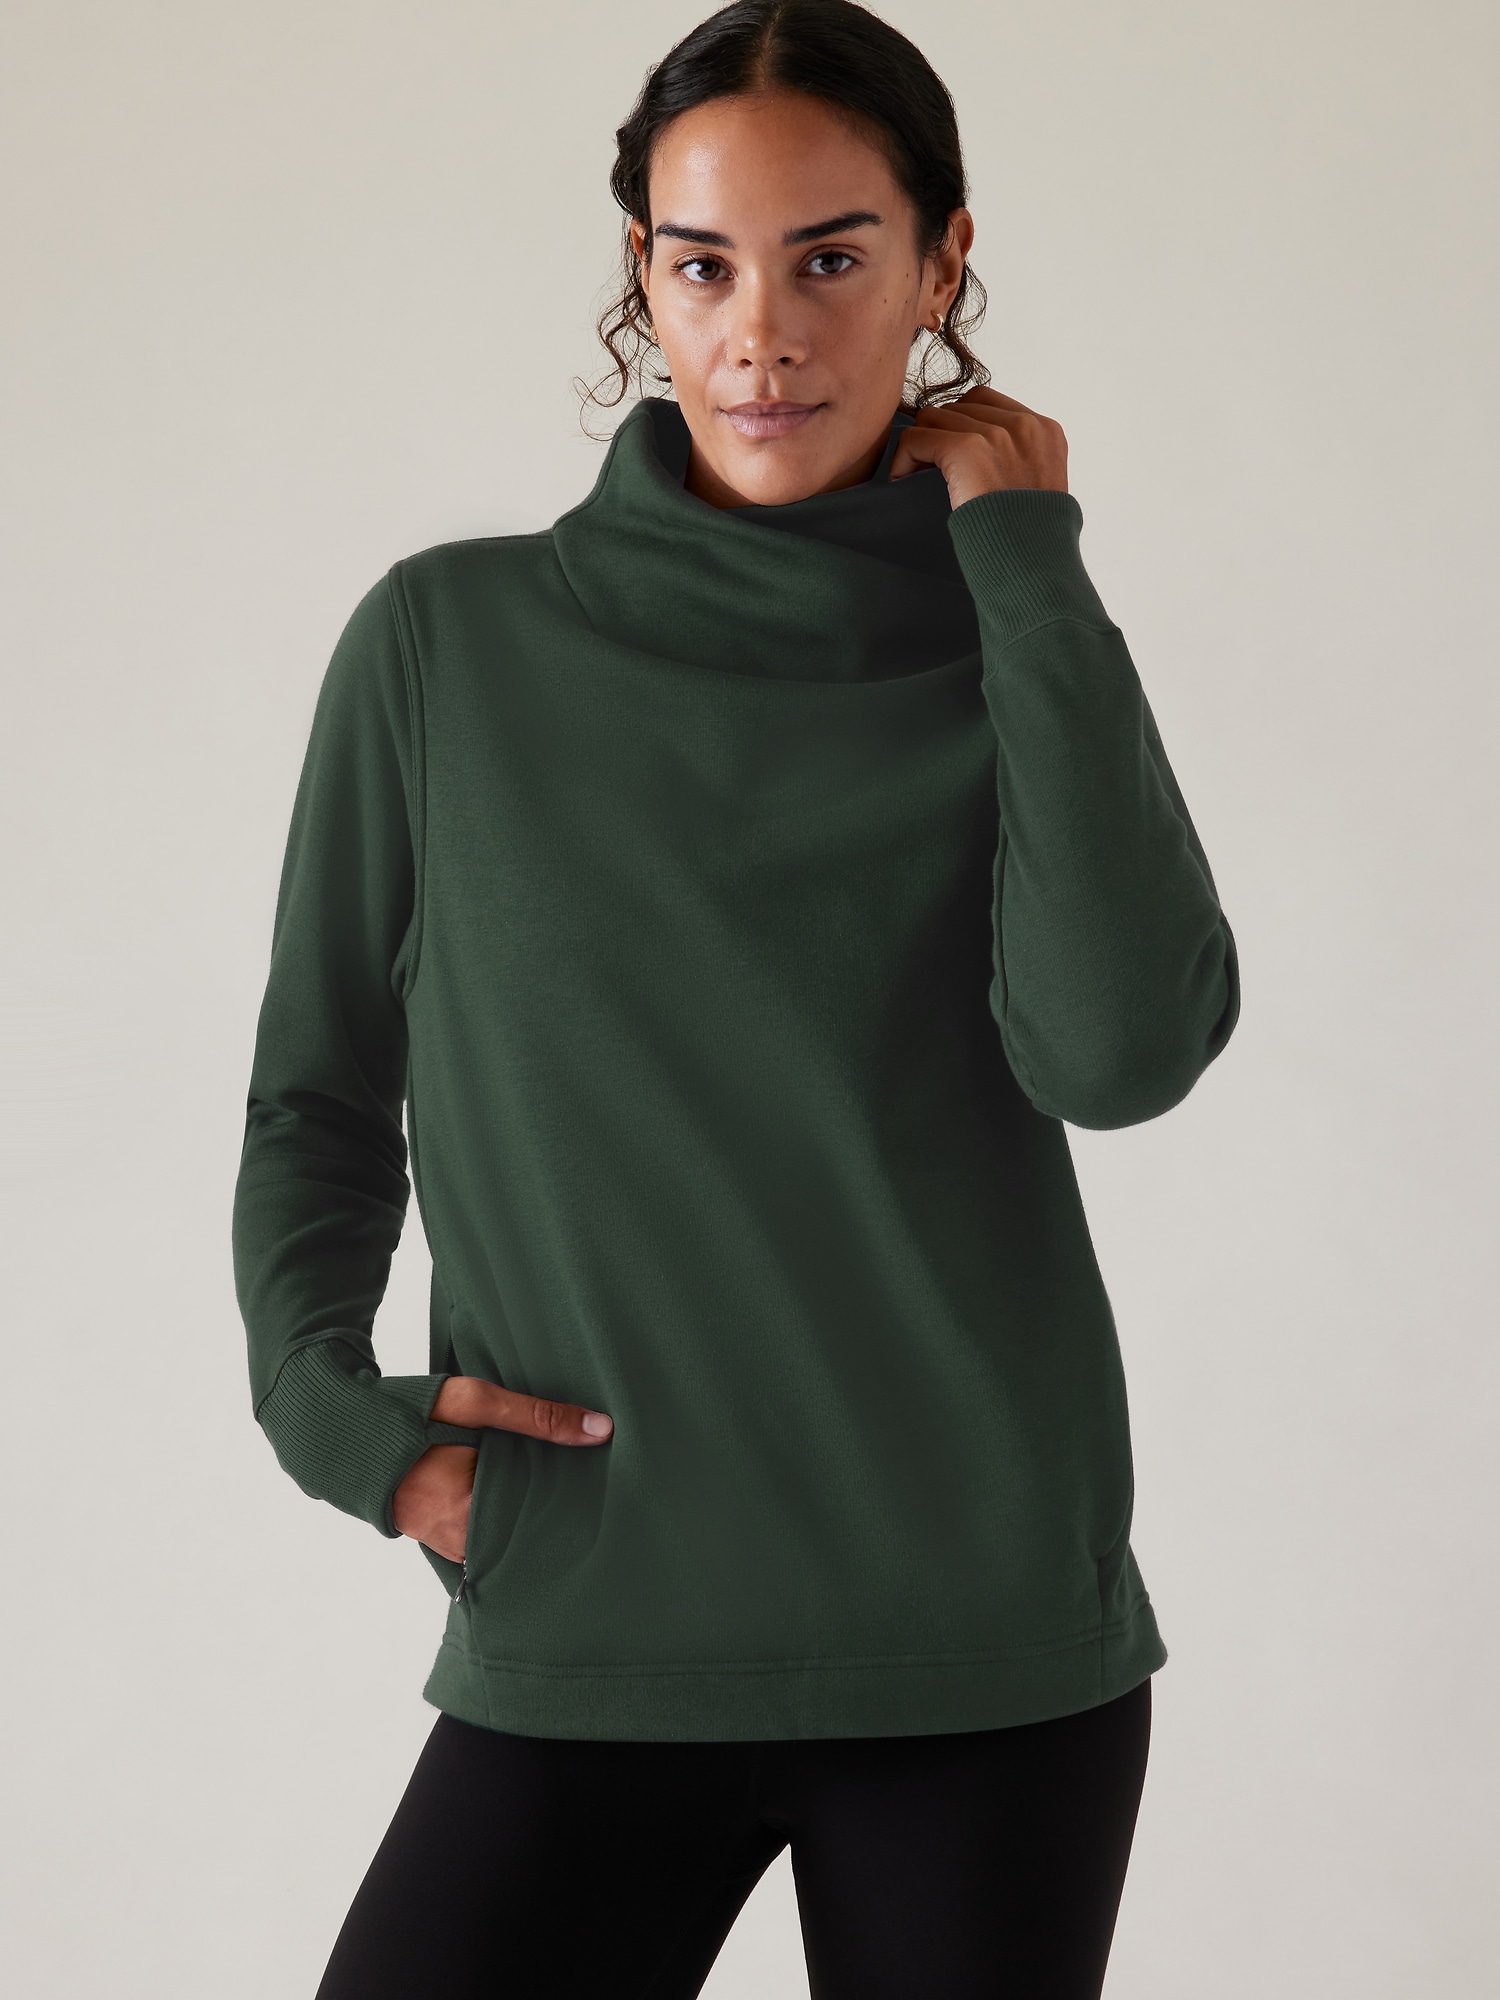 lululemon athletica Cowl Neck Athletic Sweatshirts for Women